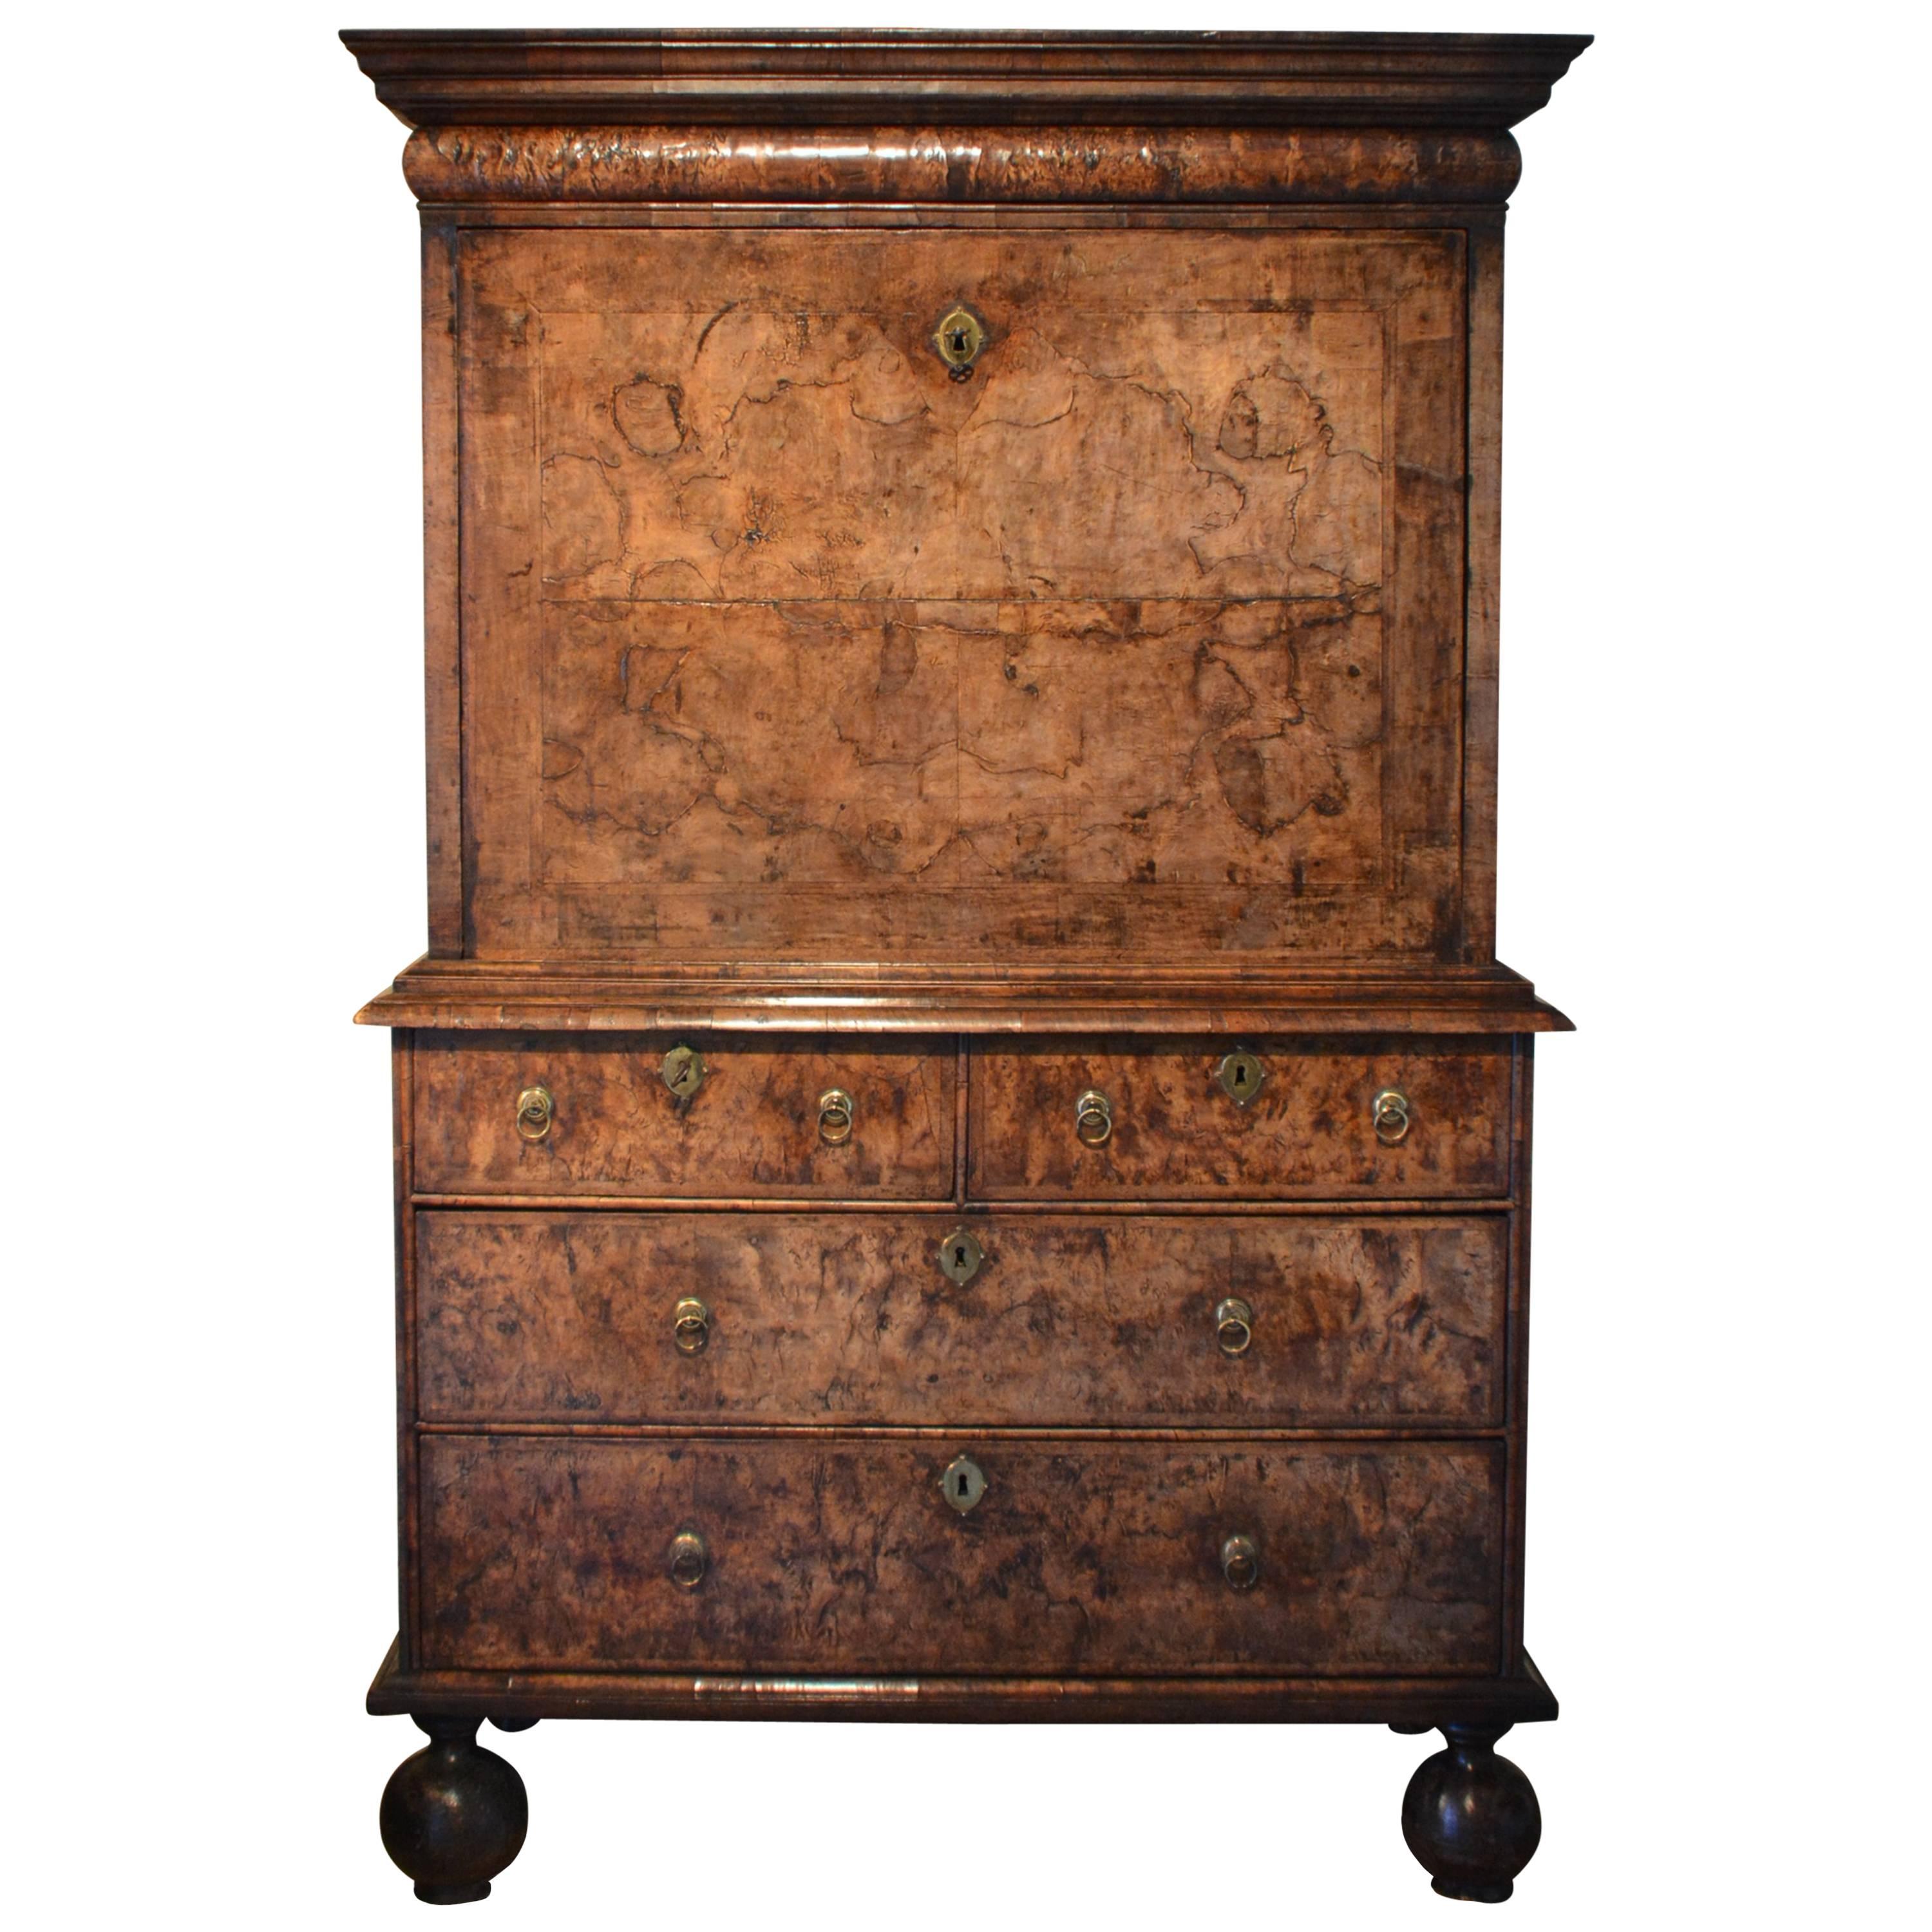 Early 18th Century Walnut Escritoire or Writing Cabinet